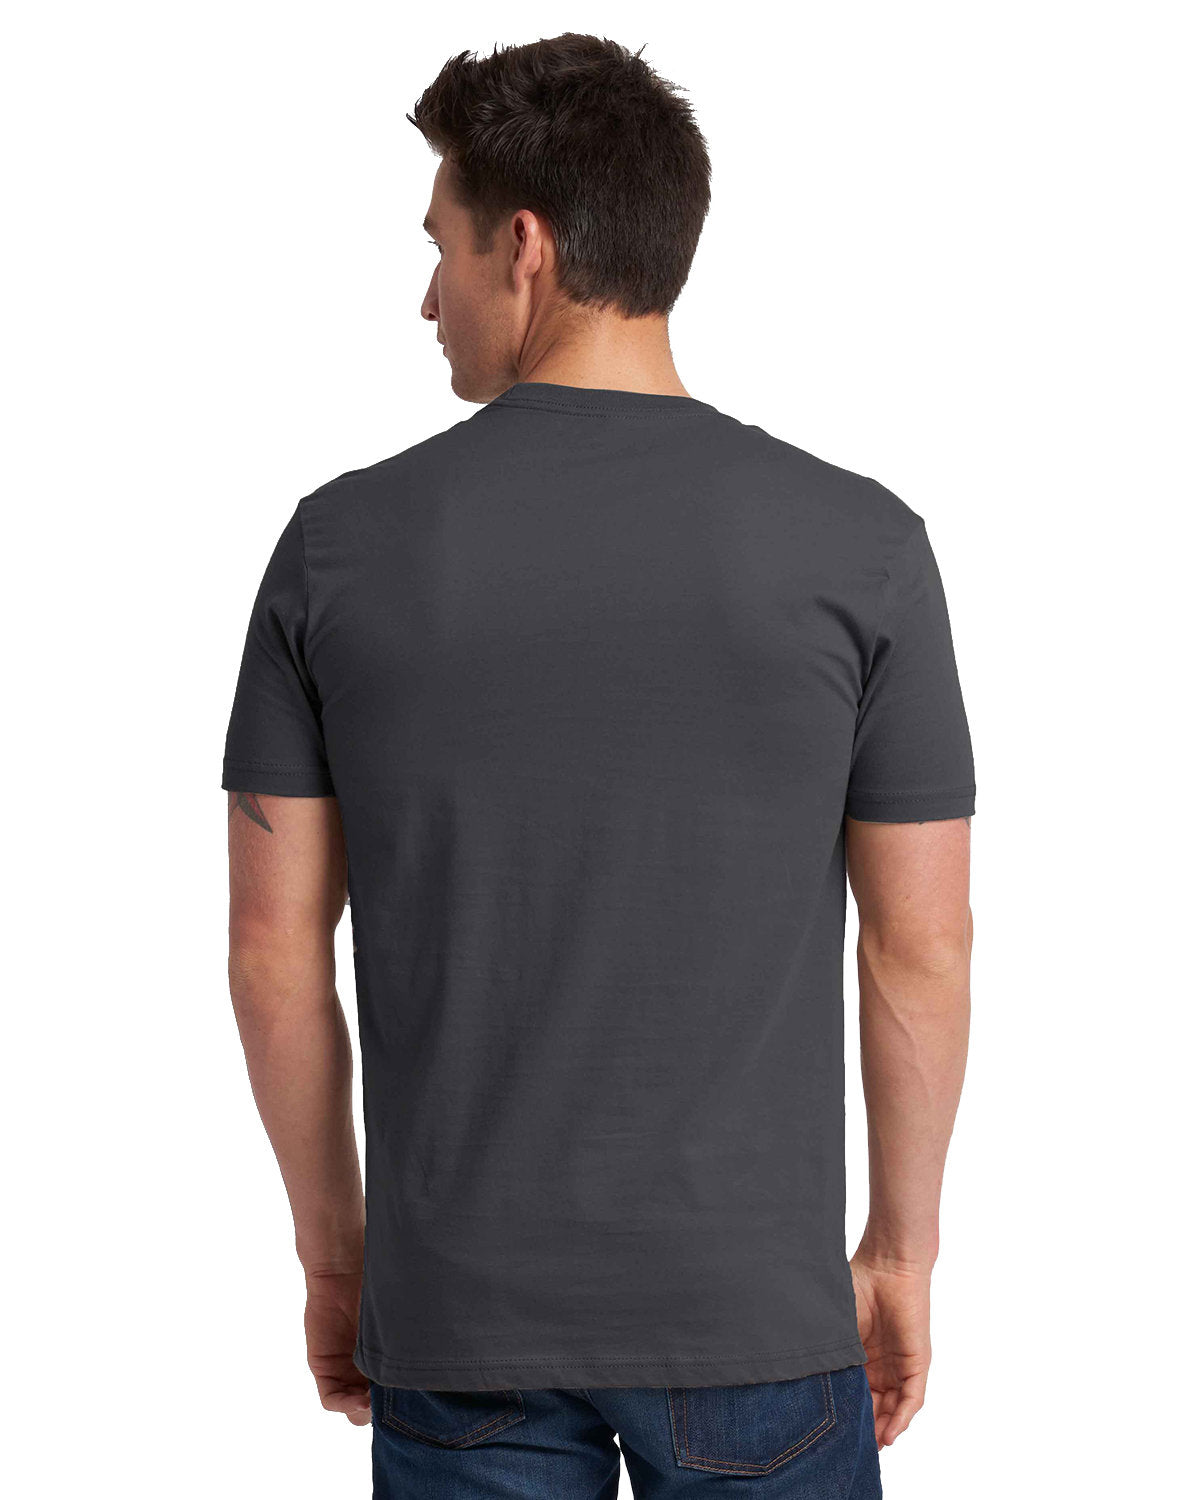 In Bulk Unisex Next T-Shirt Shirts Level – 3600 Cotton